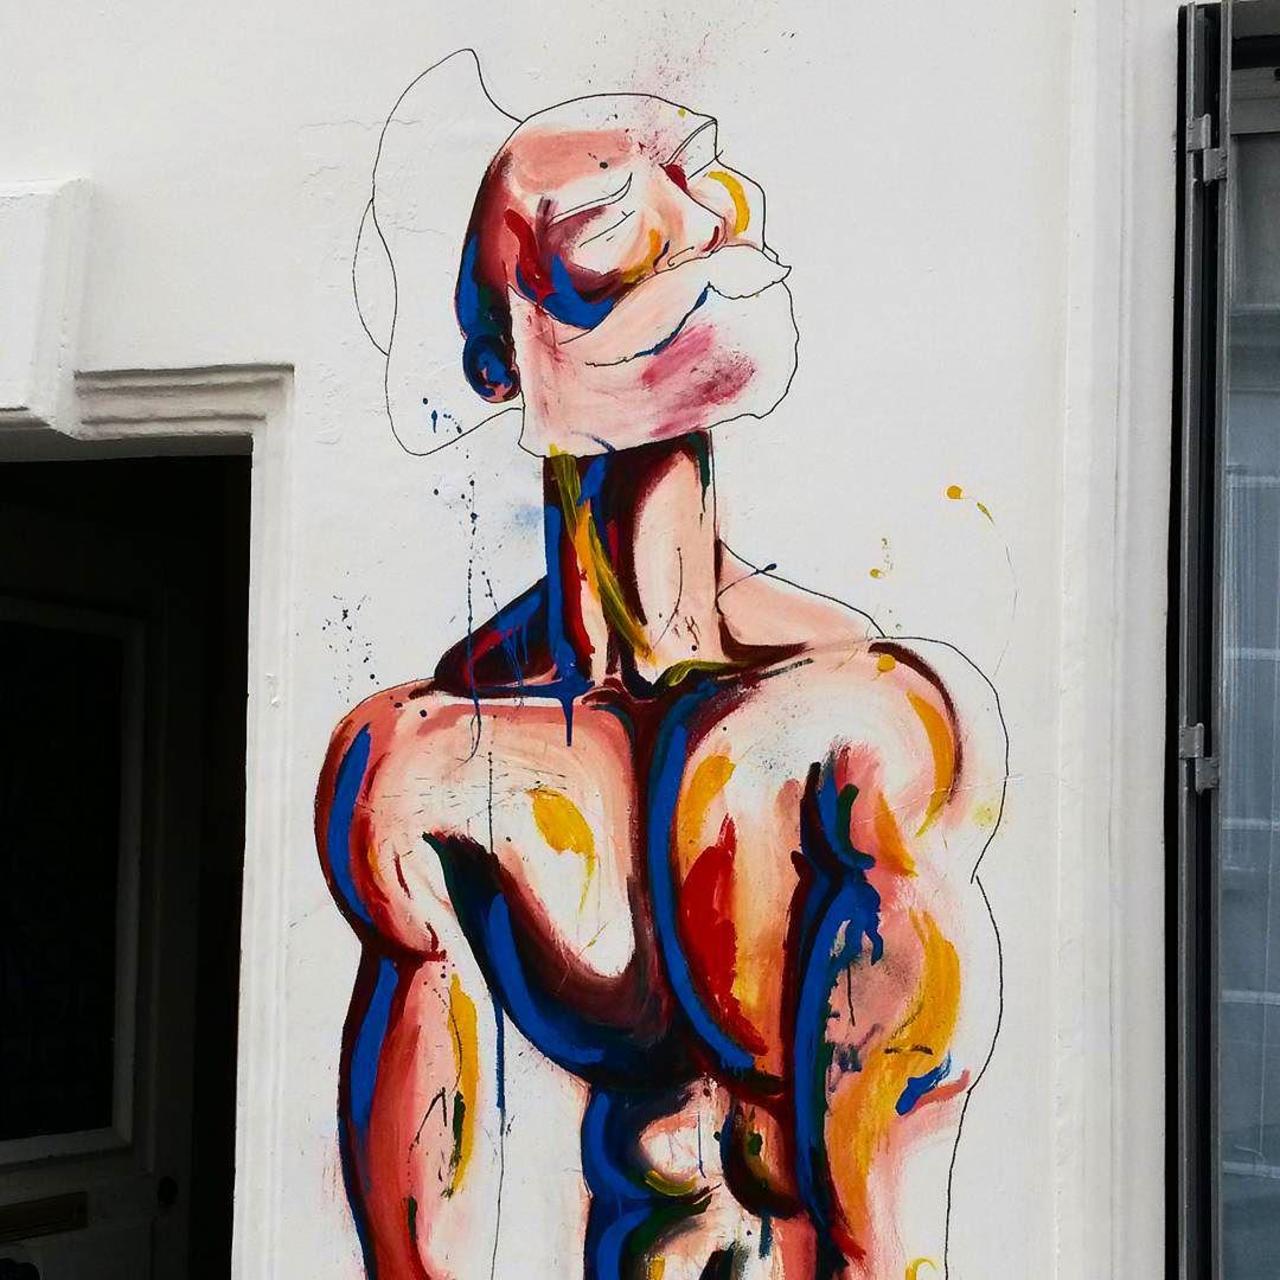 #Paris #graffiti photo by @princessepepett http://ift.tt/1LigwjW #StreetArt http://t.co/pP7He9CSJT